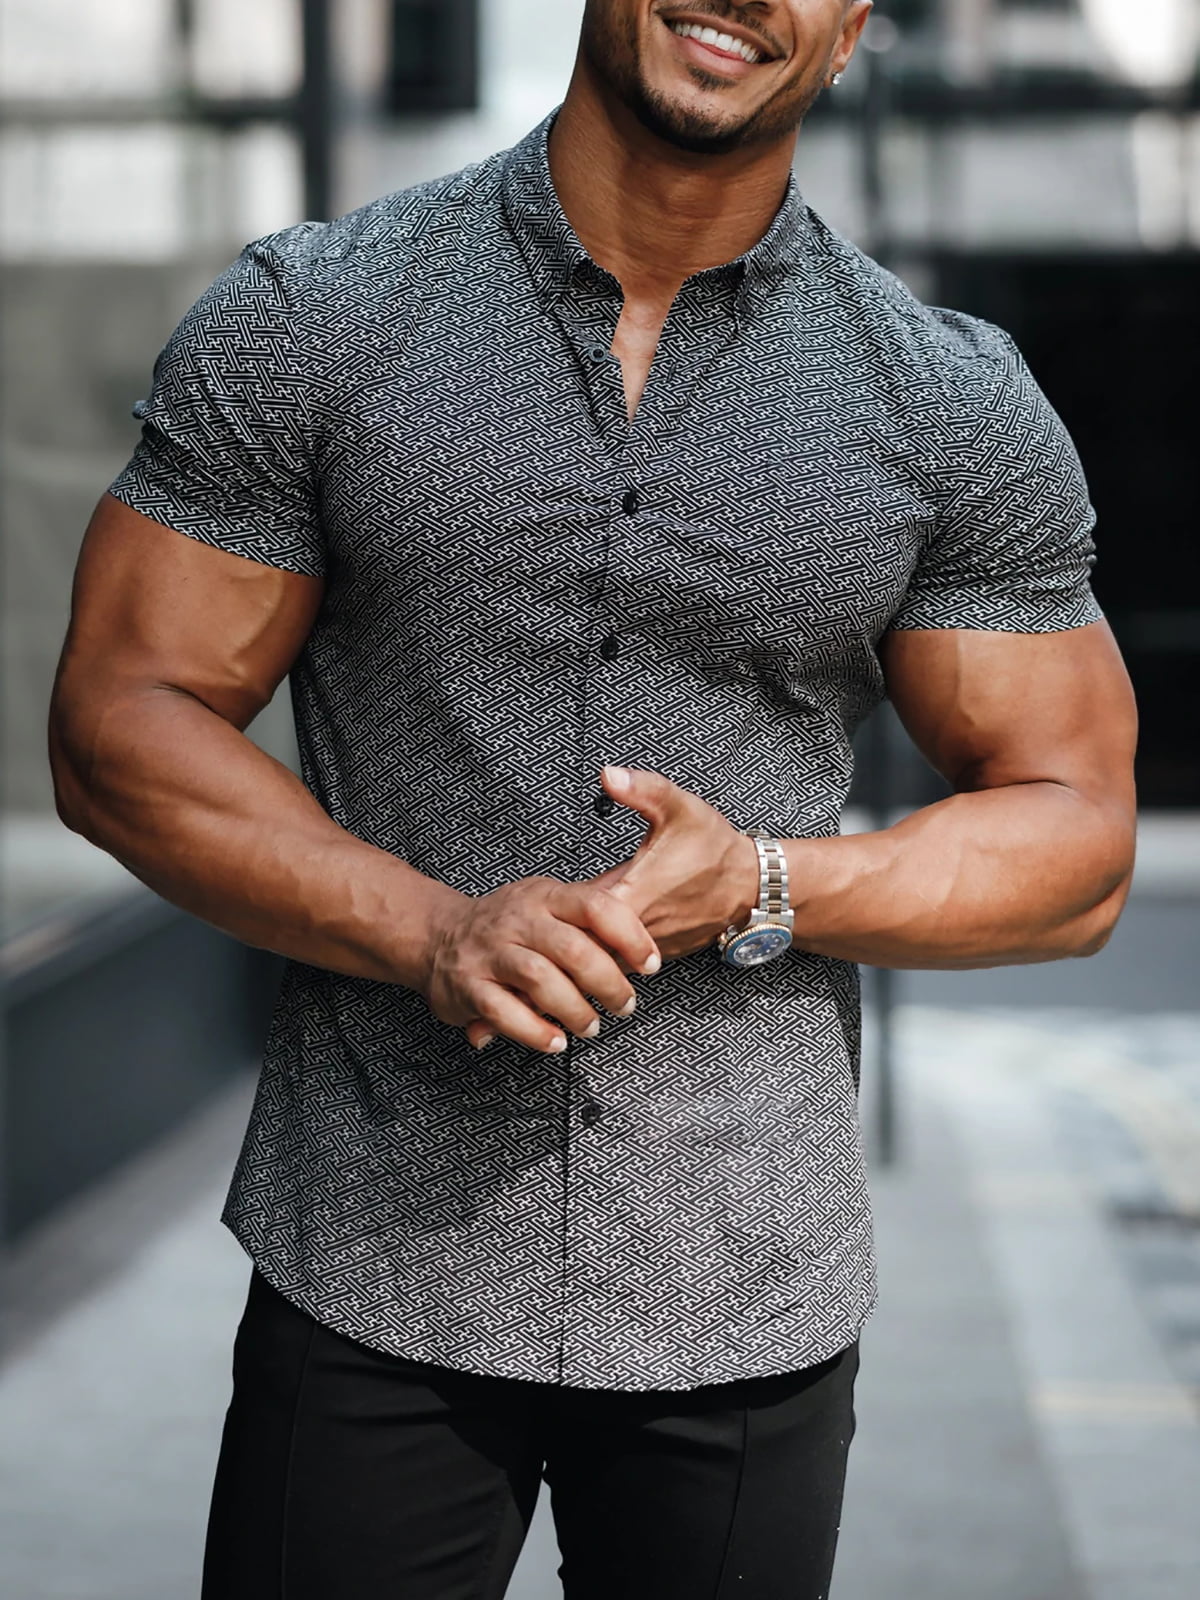 muscle shirt